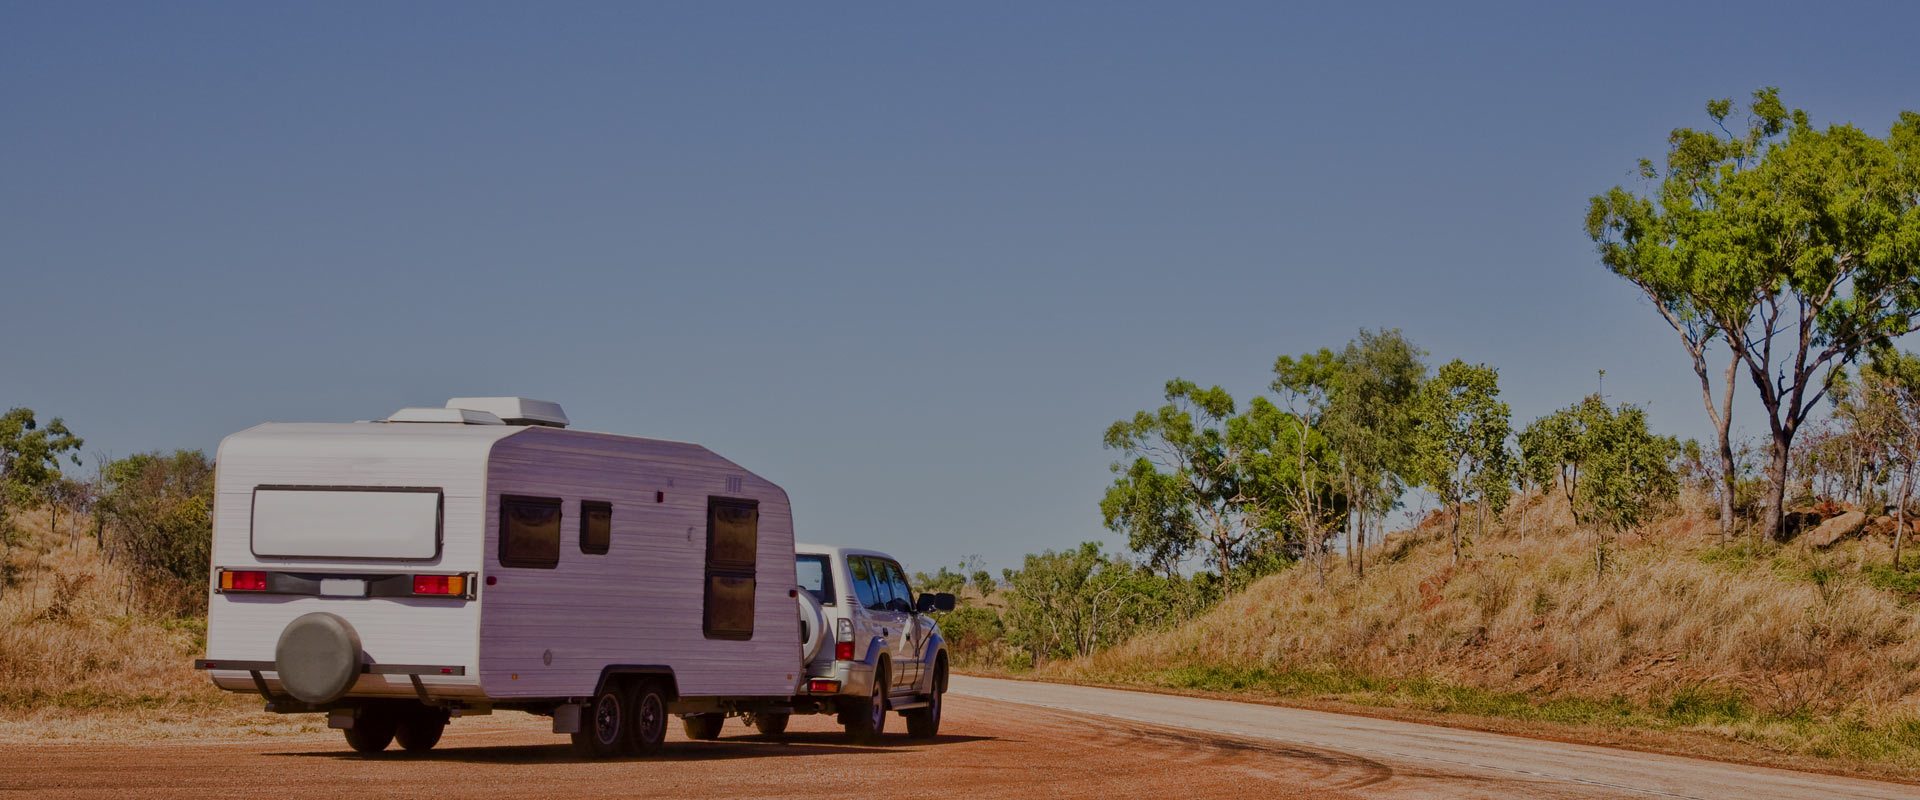 RV Stuff Australia - Tips and Advice for Caravans, Motorhomes, campervans